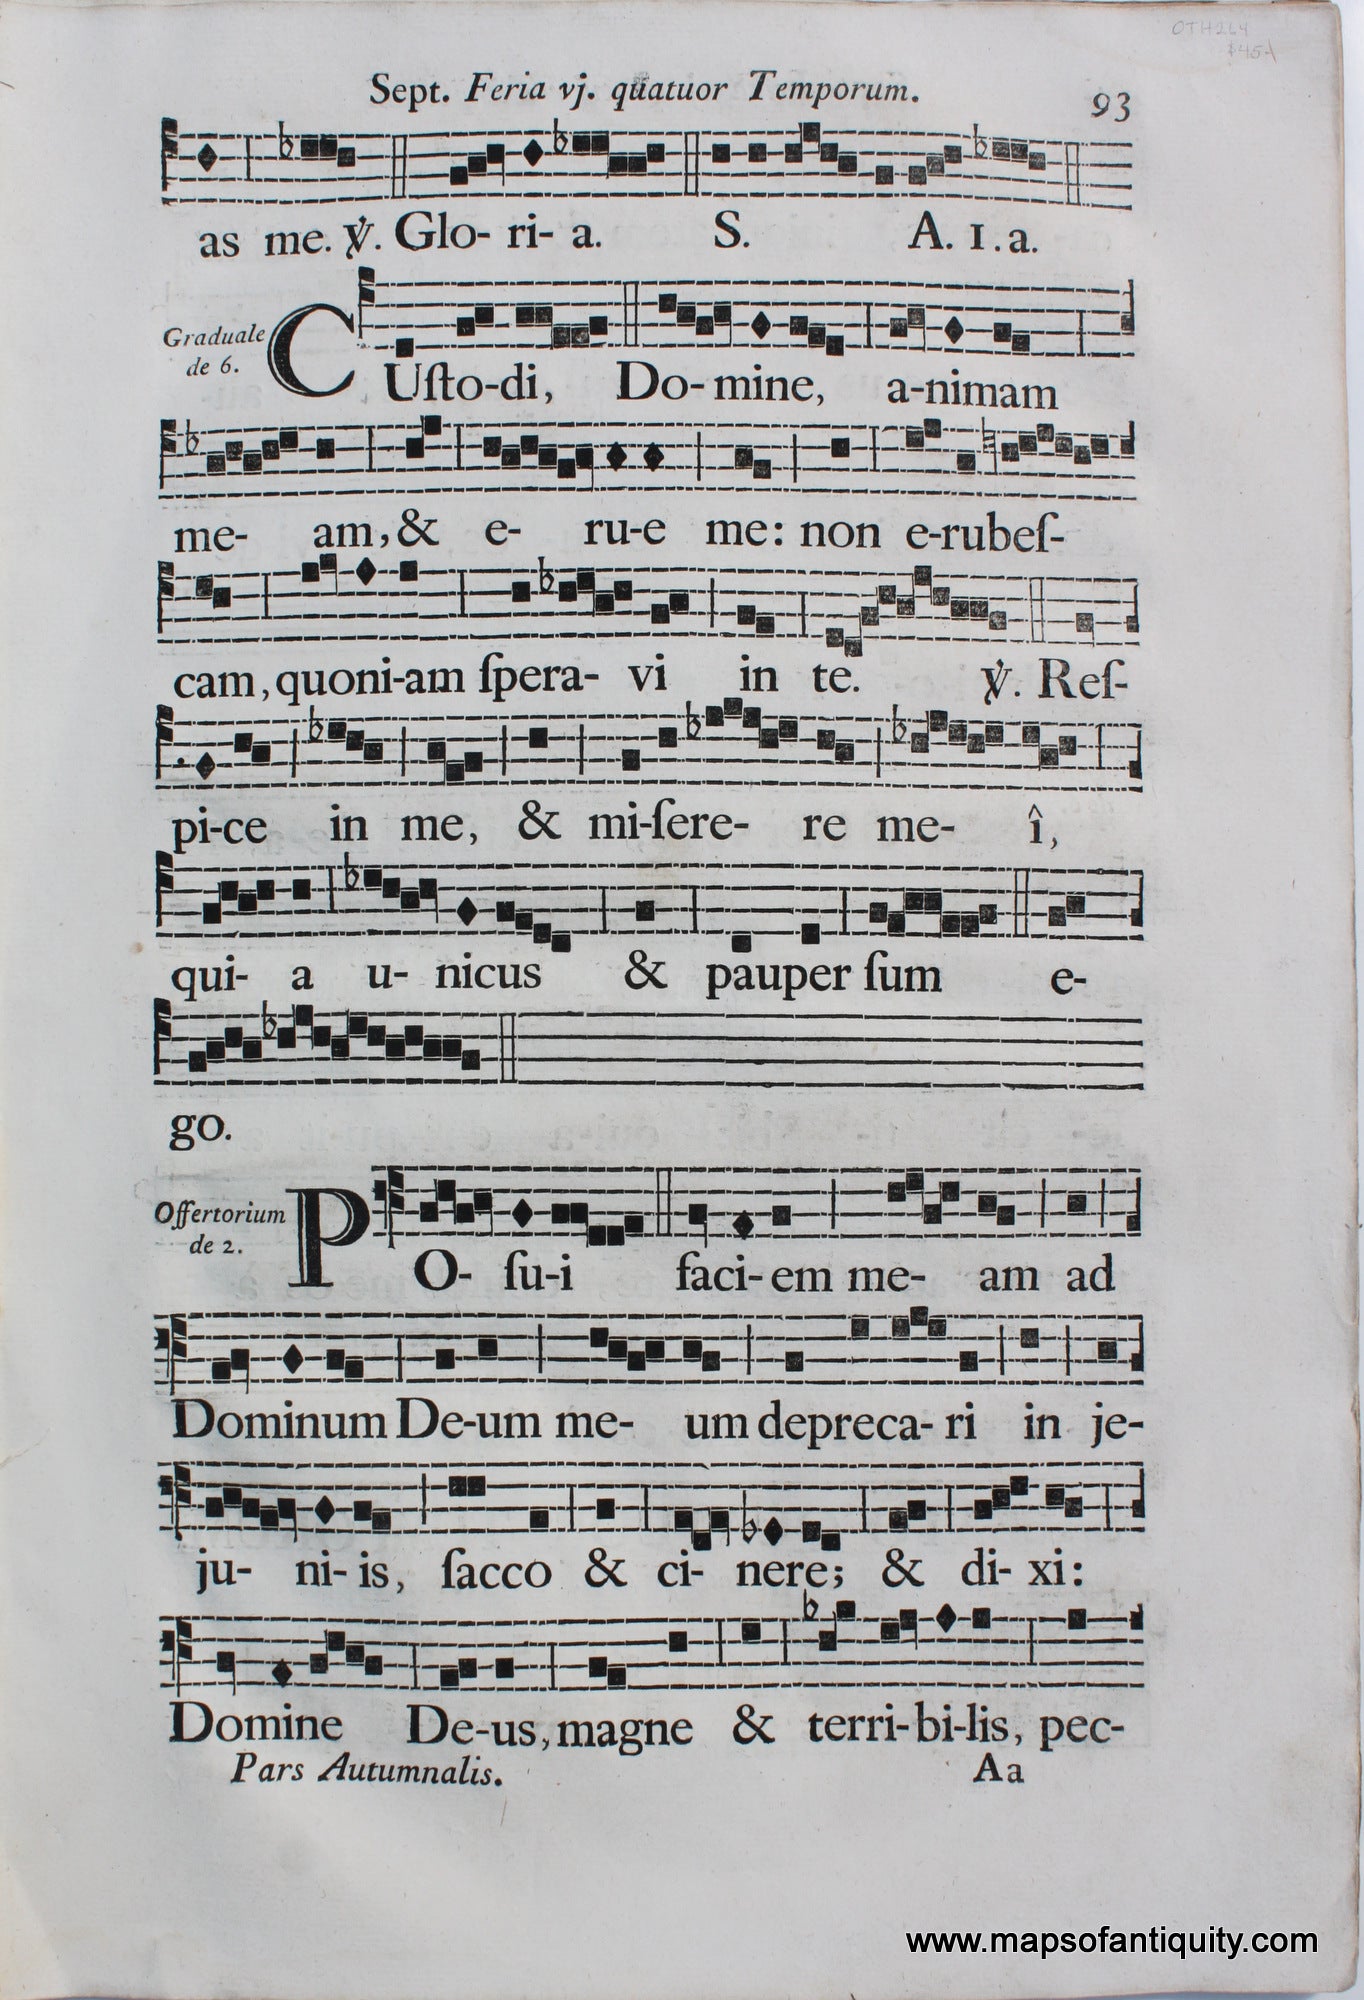 Antique-Black-and-White-Sheet-Music-Antique-Sheet-Music--Sept.-Feria-vj.-Quatuor-Temporum-pgs-93-94-Antique-Prints-Antique-Sheet-Music-c.-mid-1700s-unknown-Maps-Of-Antiquity